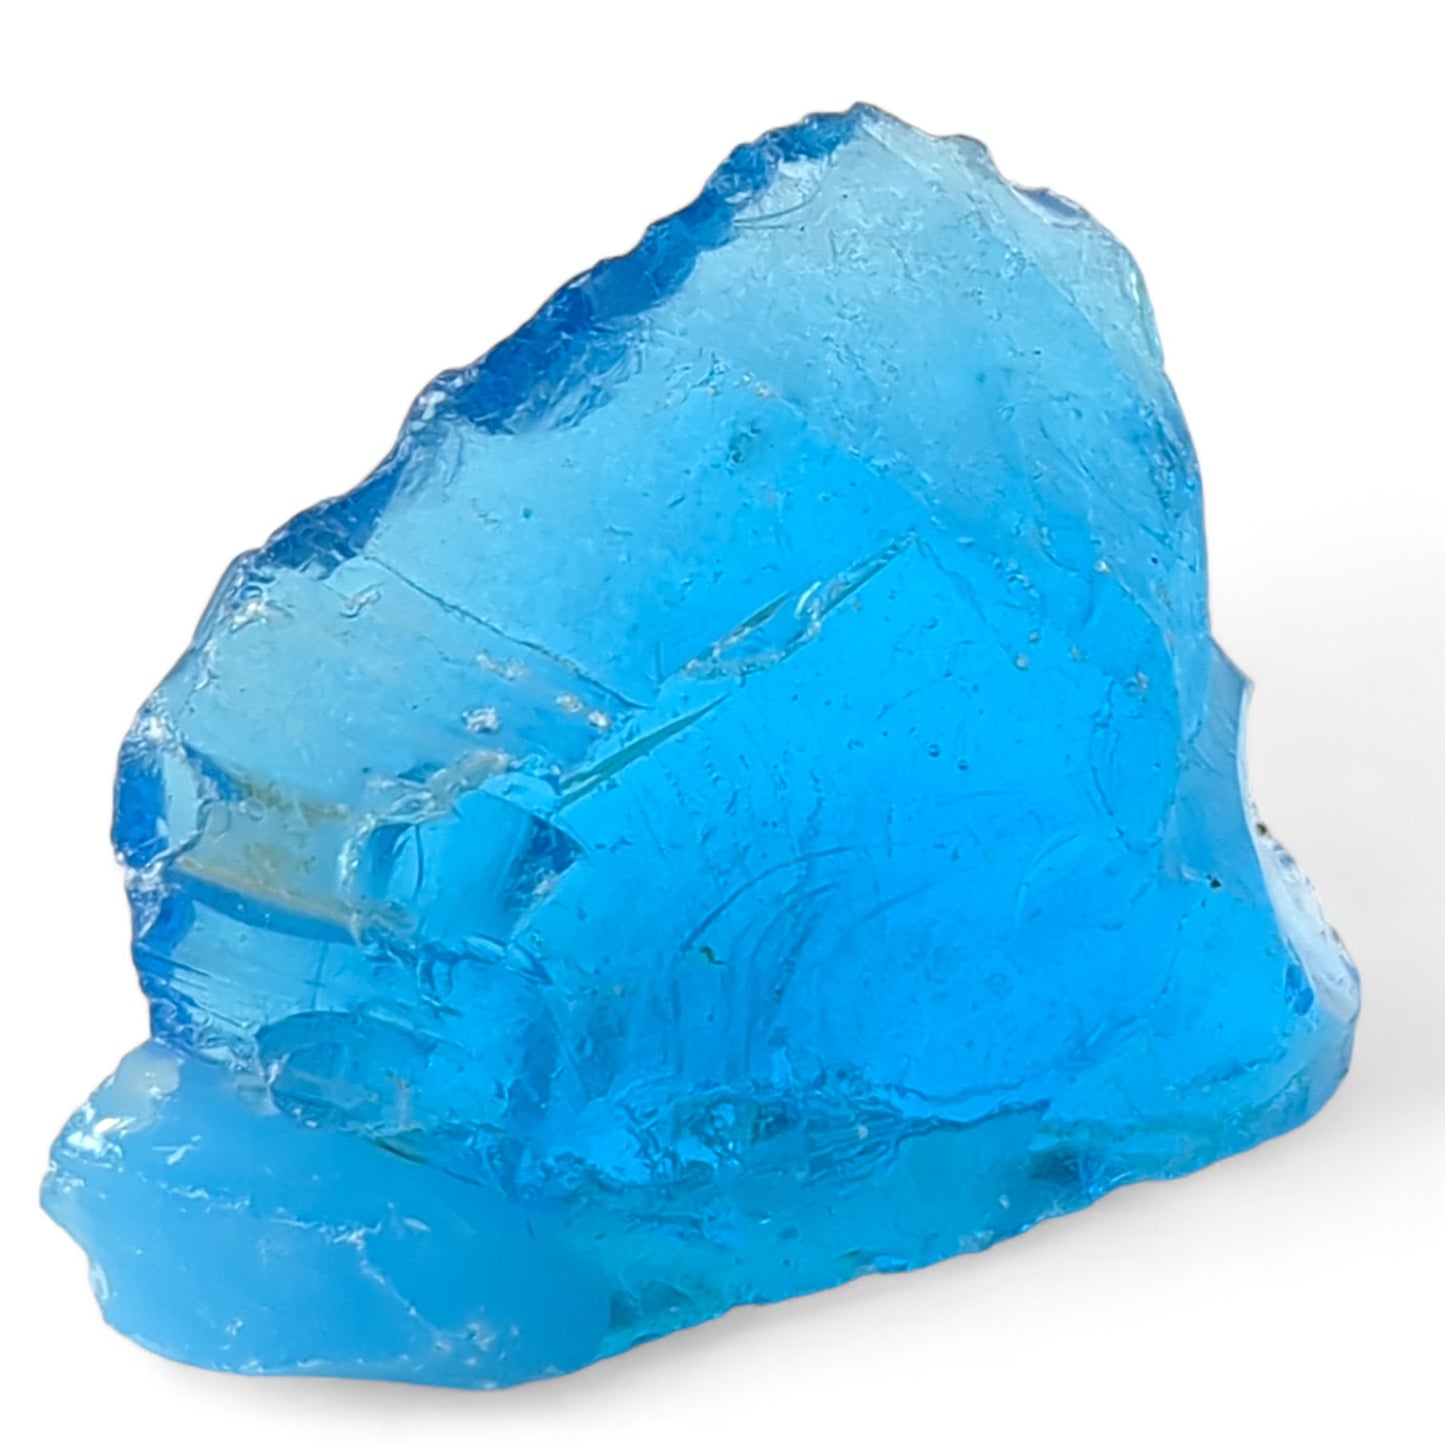 Satin Blue Art Glass Cullet Glowing Translucent Manganese Slag Glass #4GM99